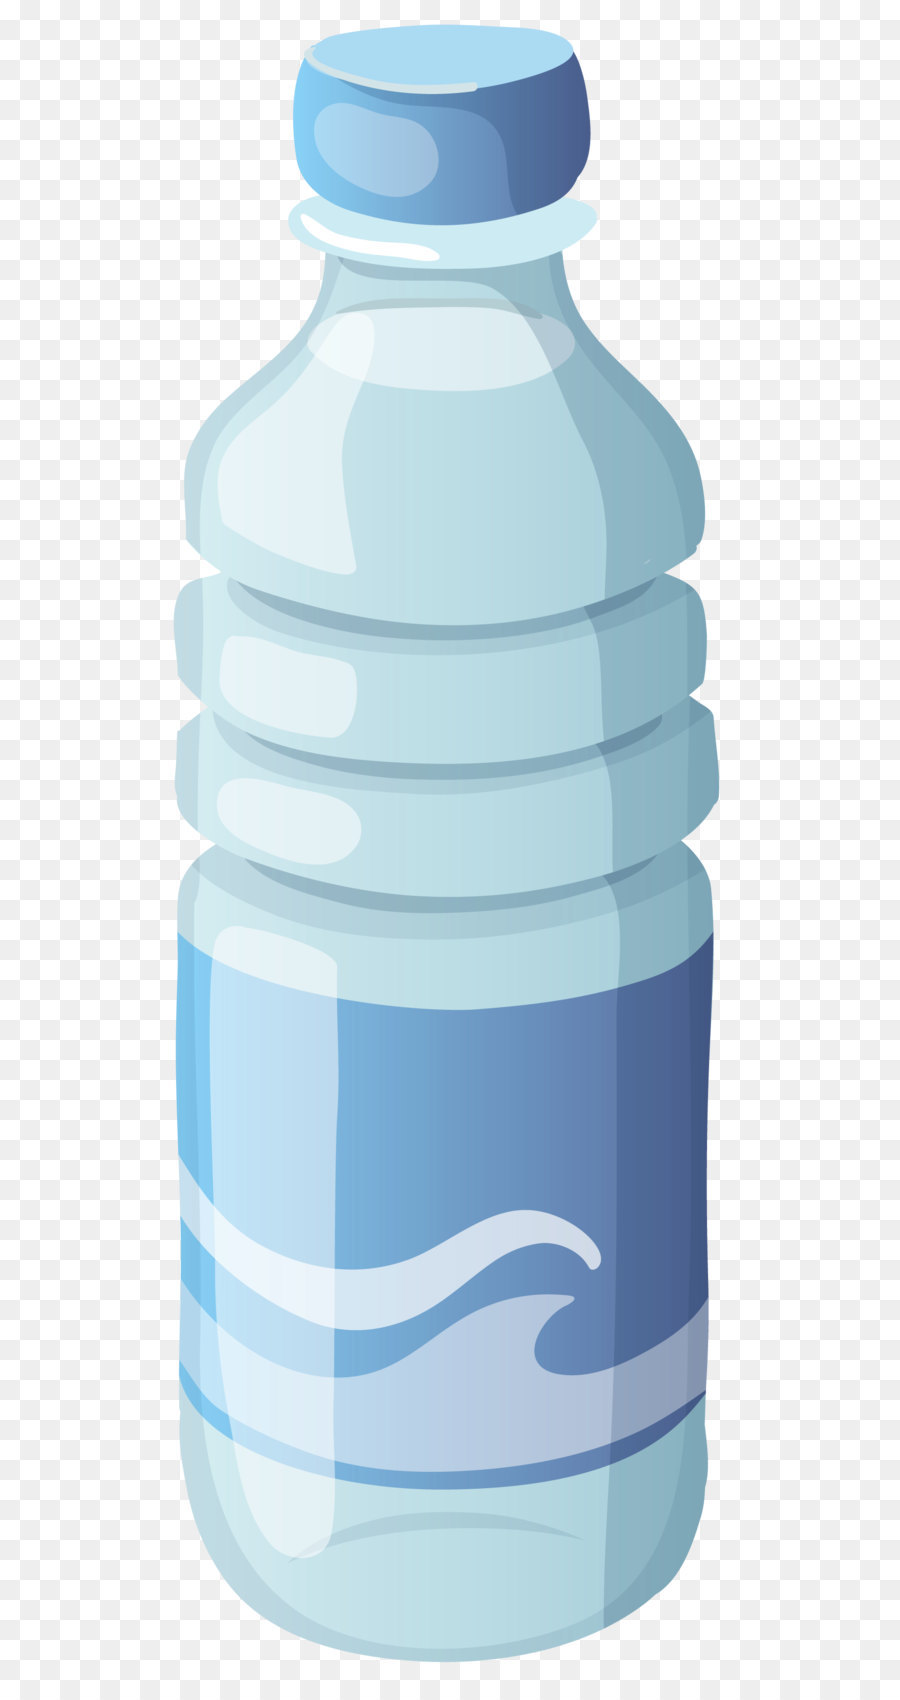 Bottle clipart mineral water. Bottled clip art small